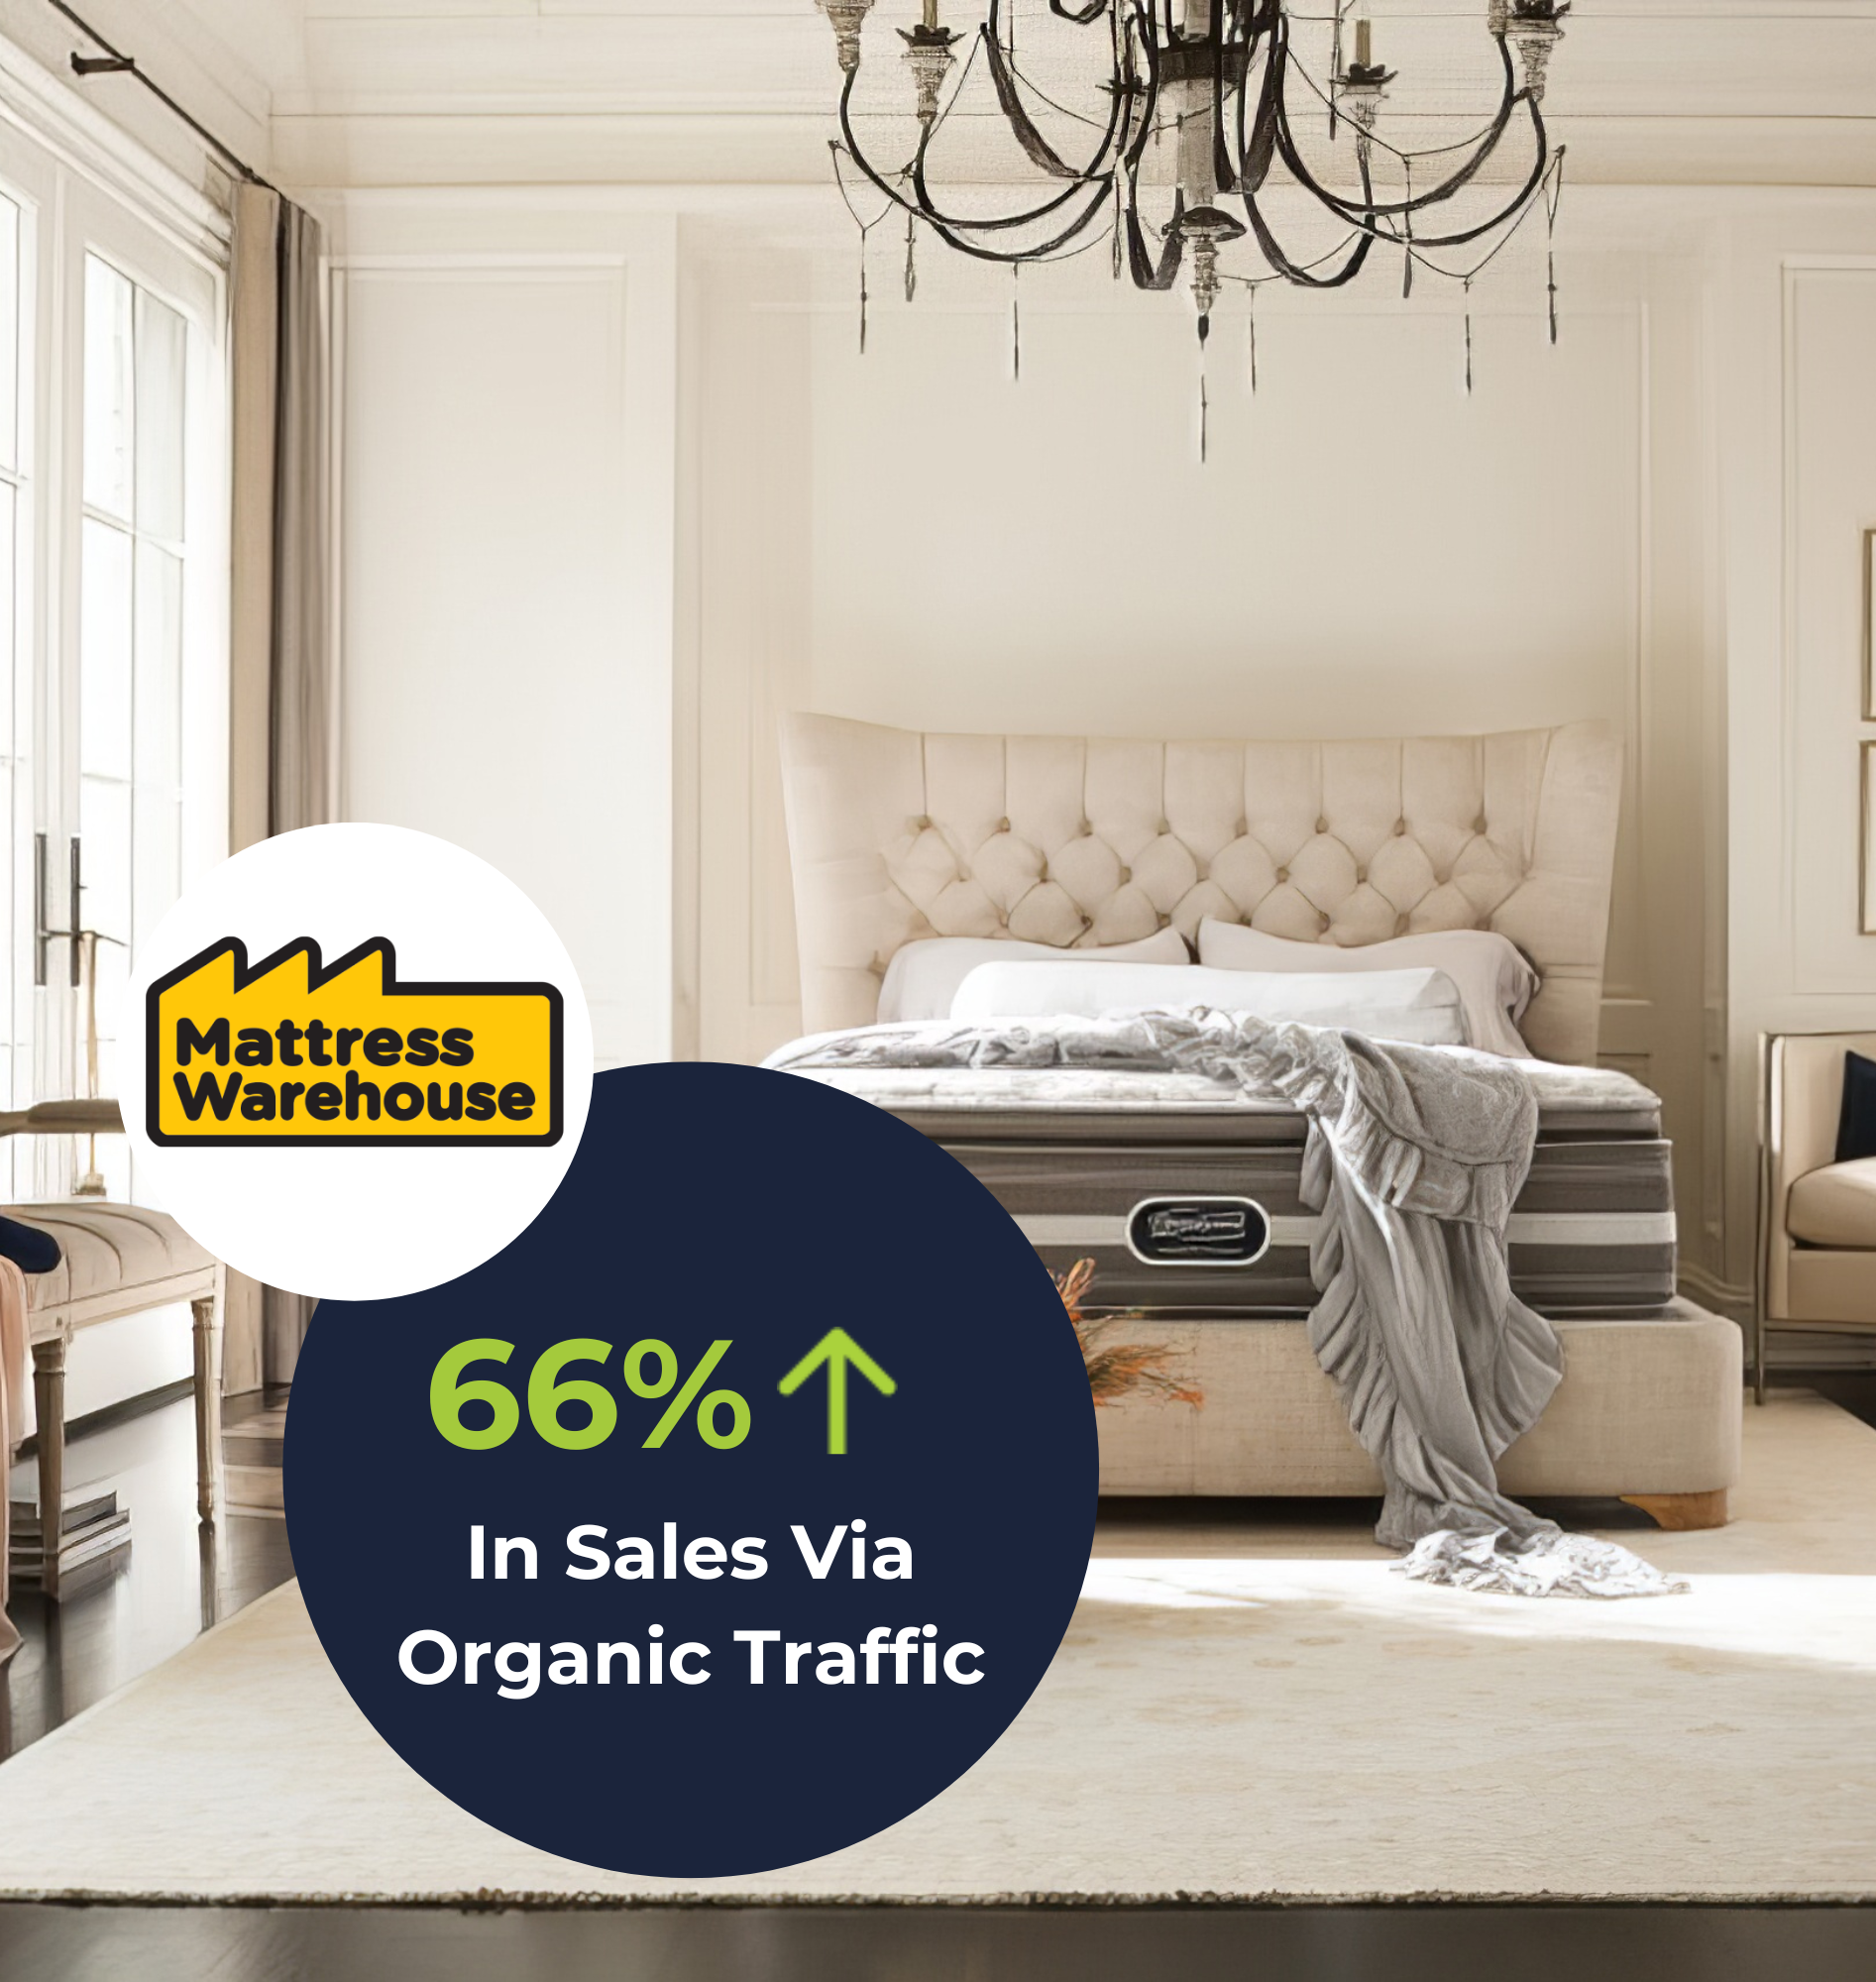 Batenburgs 66% increase in sales vis organic traffic